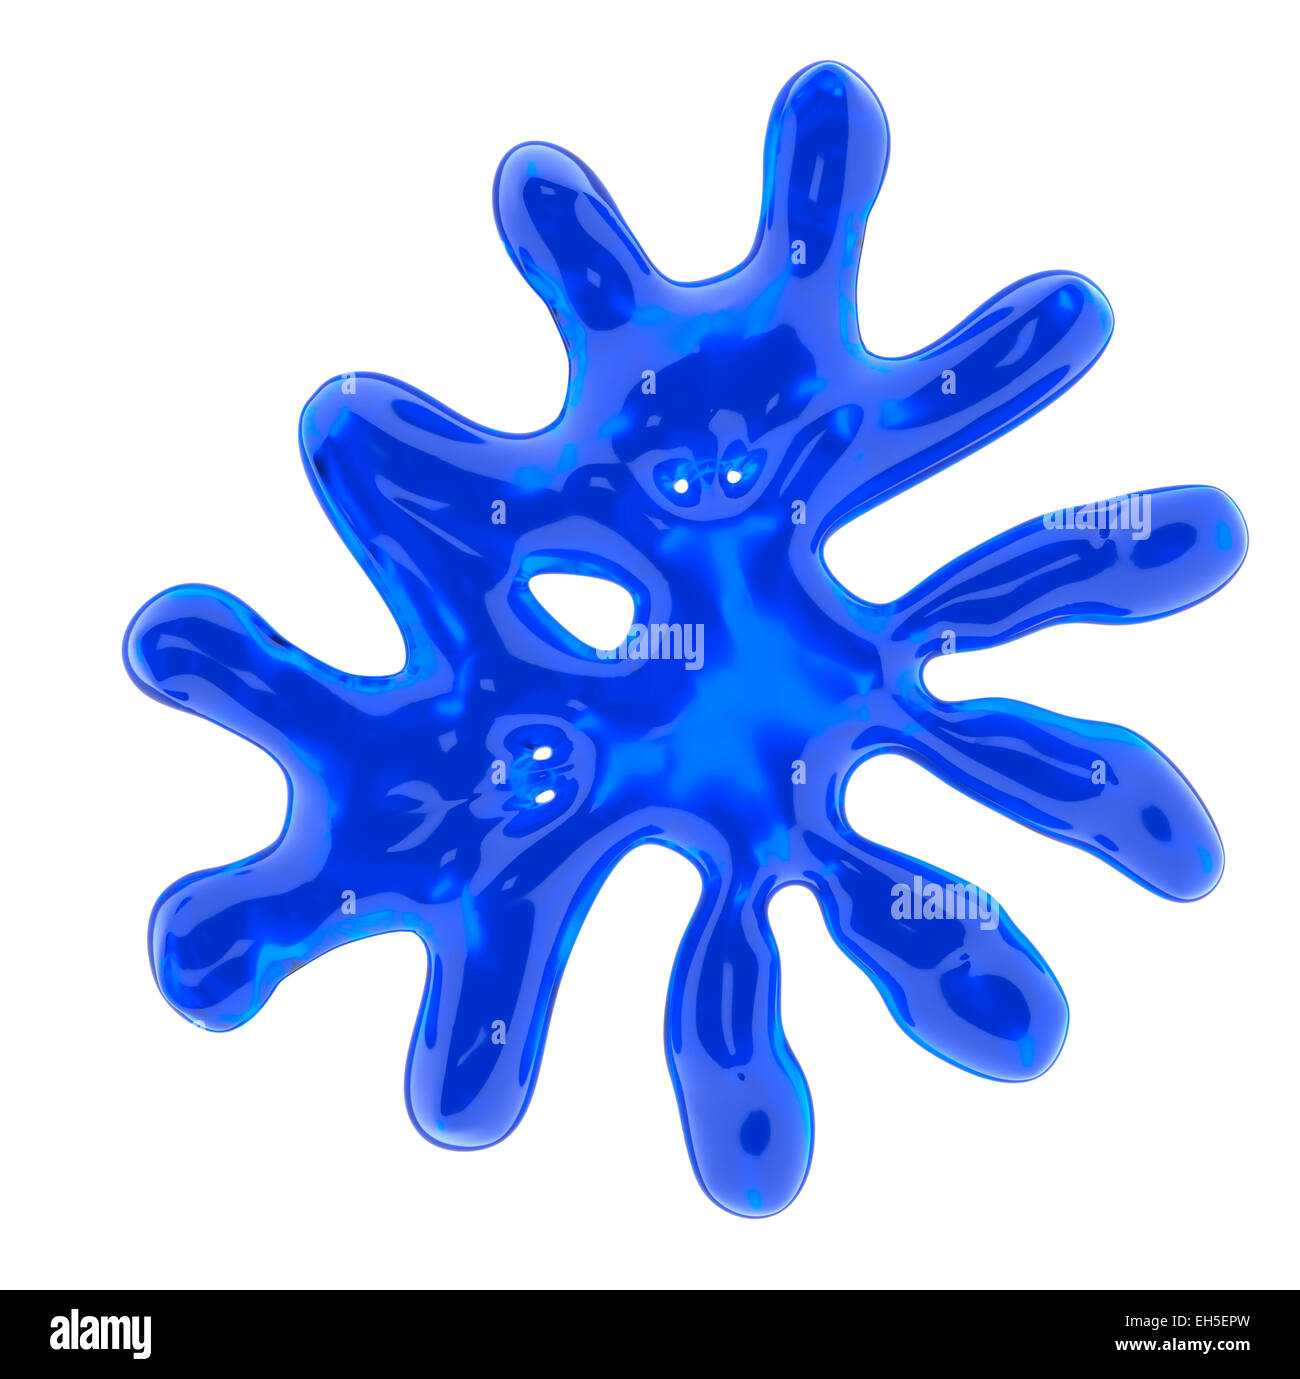 Splashes of blue liquid or gel isolated on white. Large resolution Stock Photo